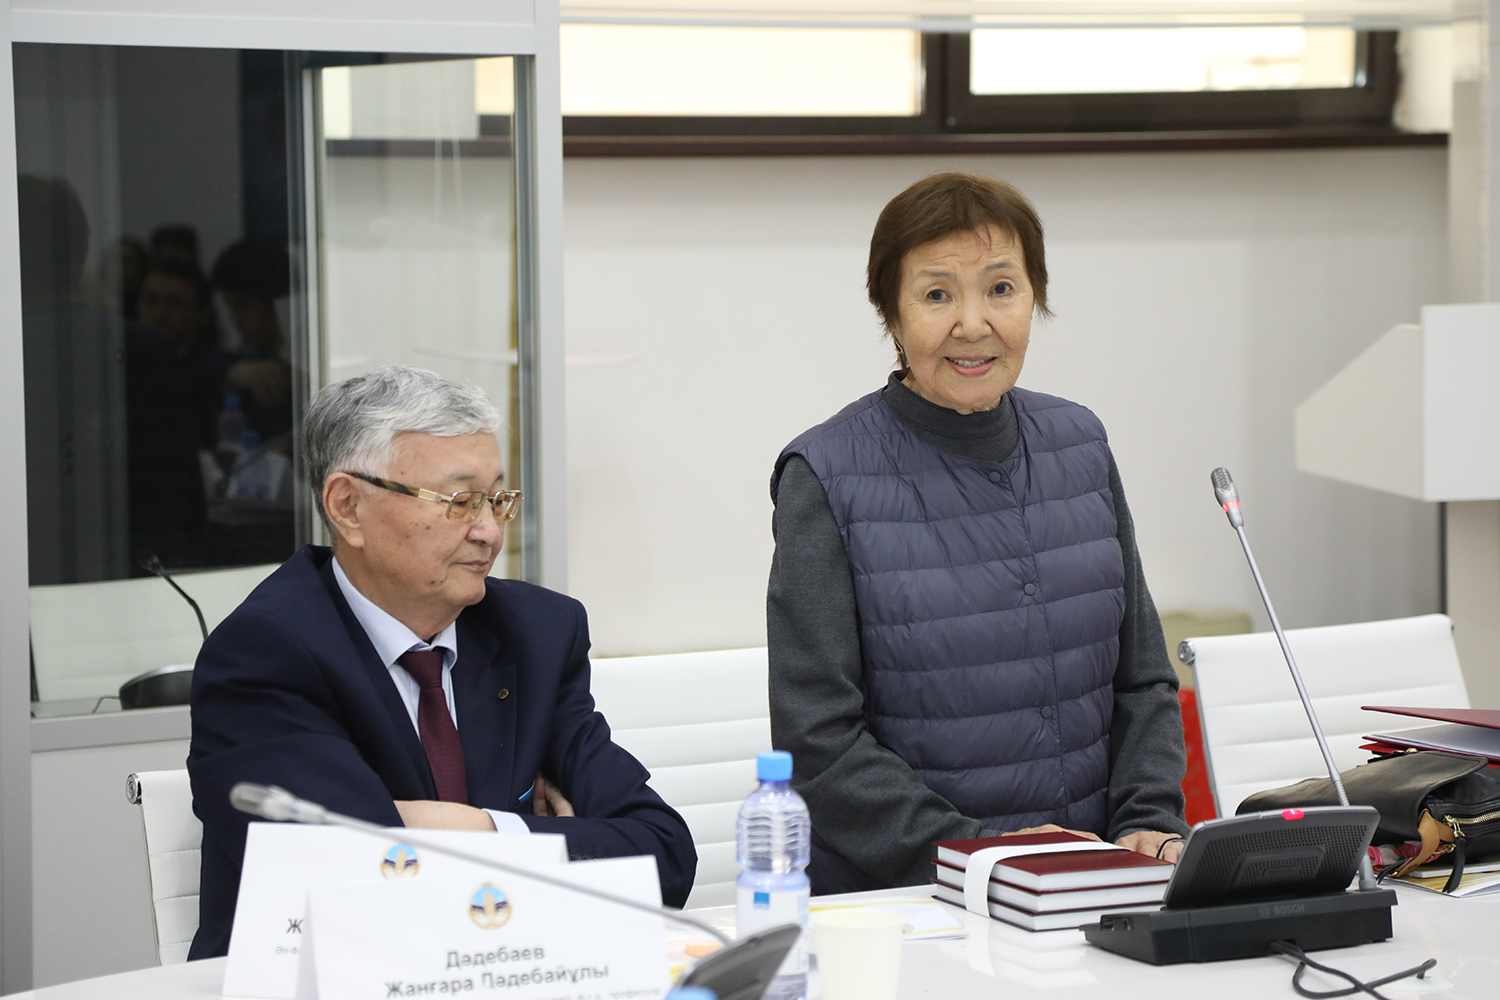 KazNU congratulated Professor Svetlana Ashimkhanova on her anniversary